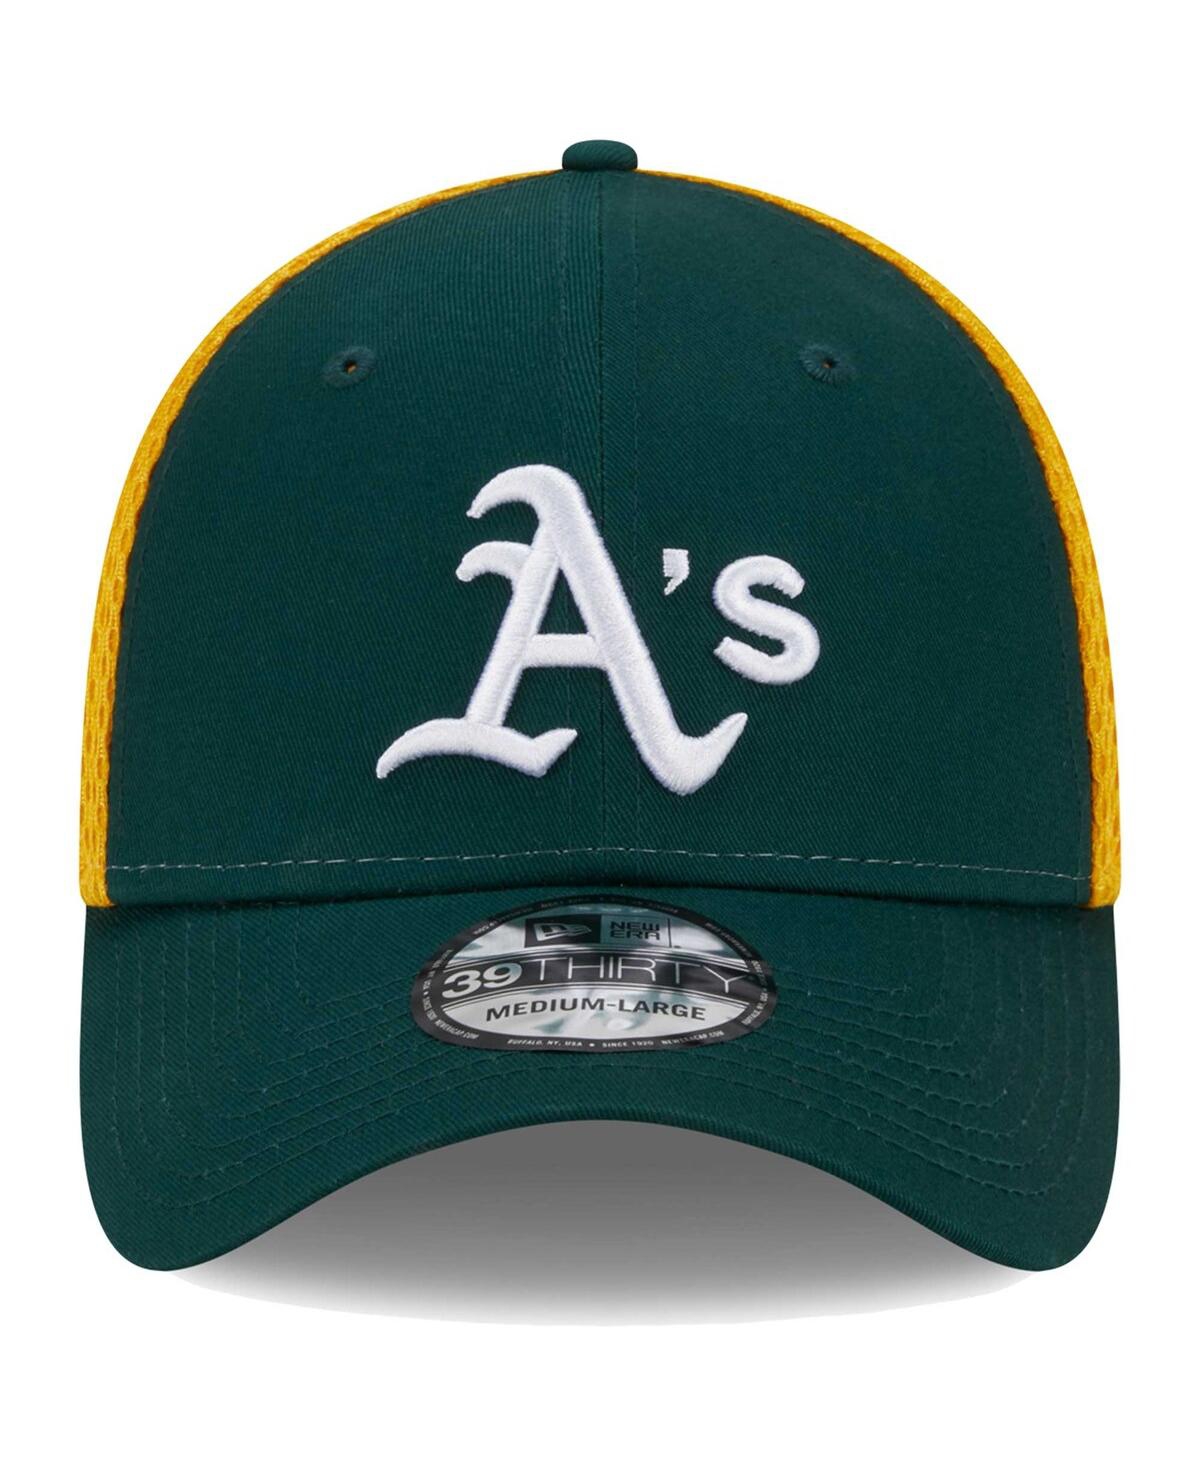 Shop New Era Men's  Green Oakland Athletics Team Neo 39thirty Flex Hat